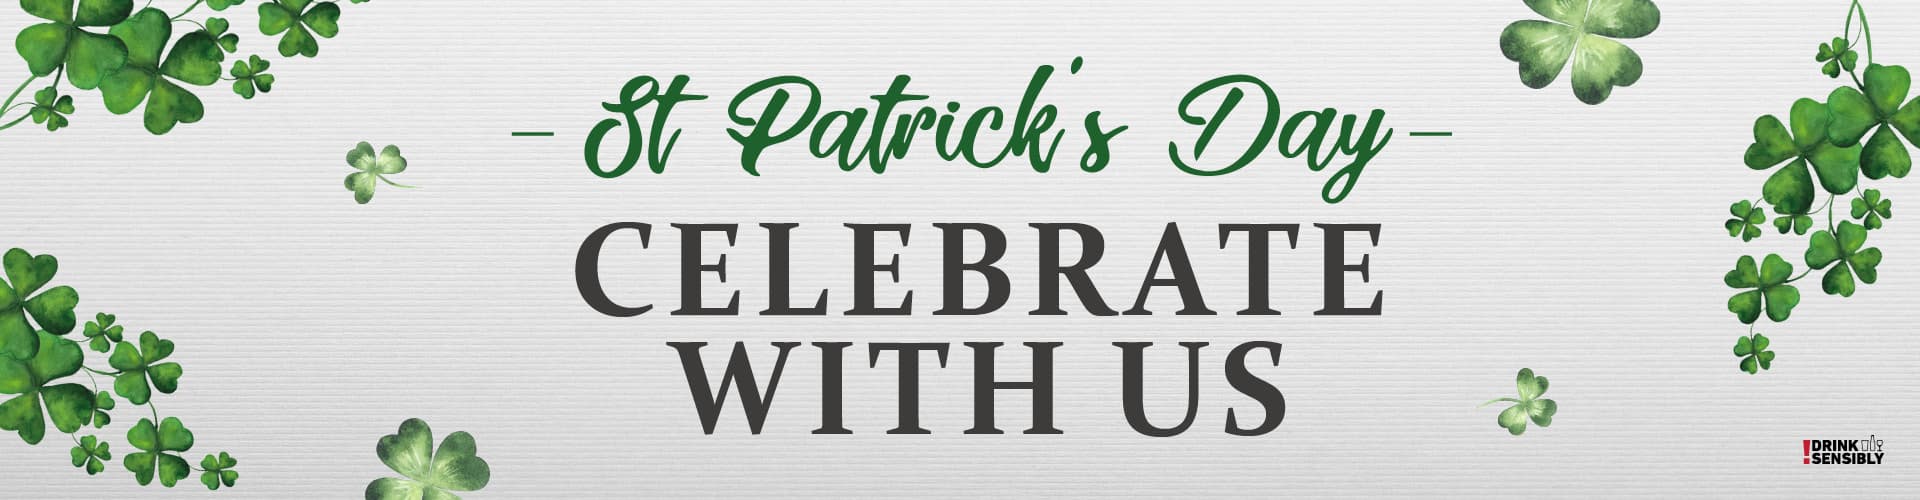 Celebrate St Patrick's Day in Hayling Island